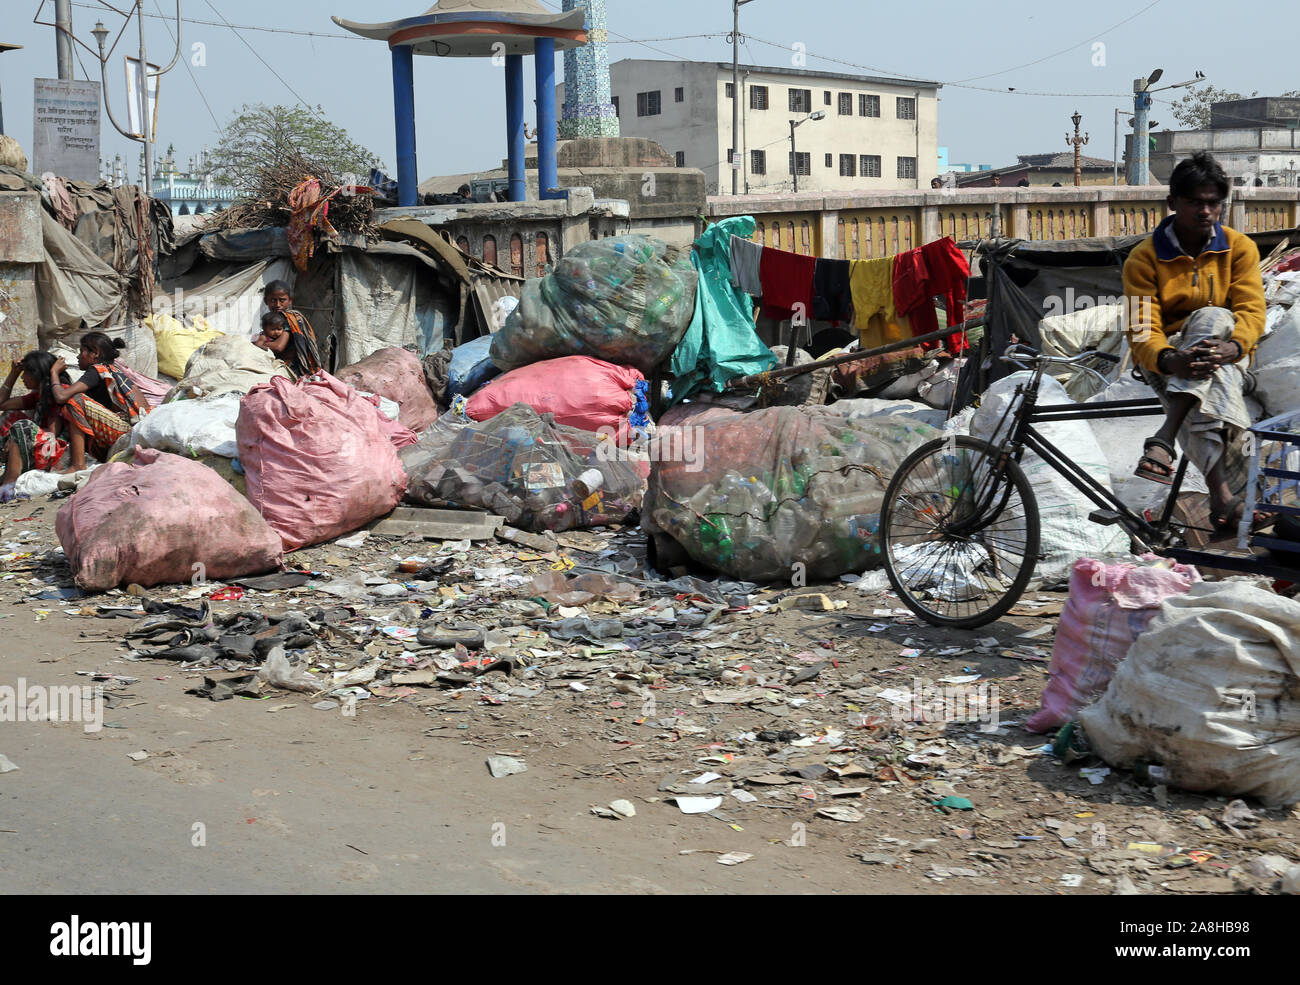 Ghetto y tugurios en Calcuta, India Foto de stock